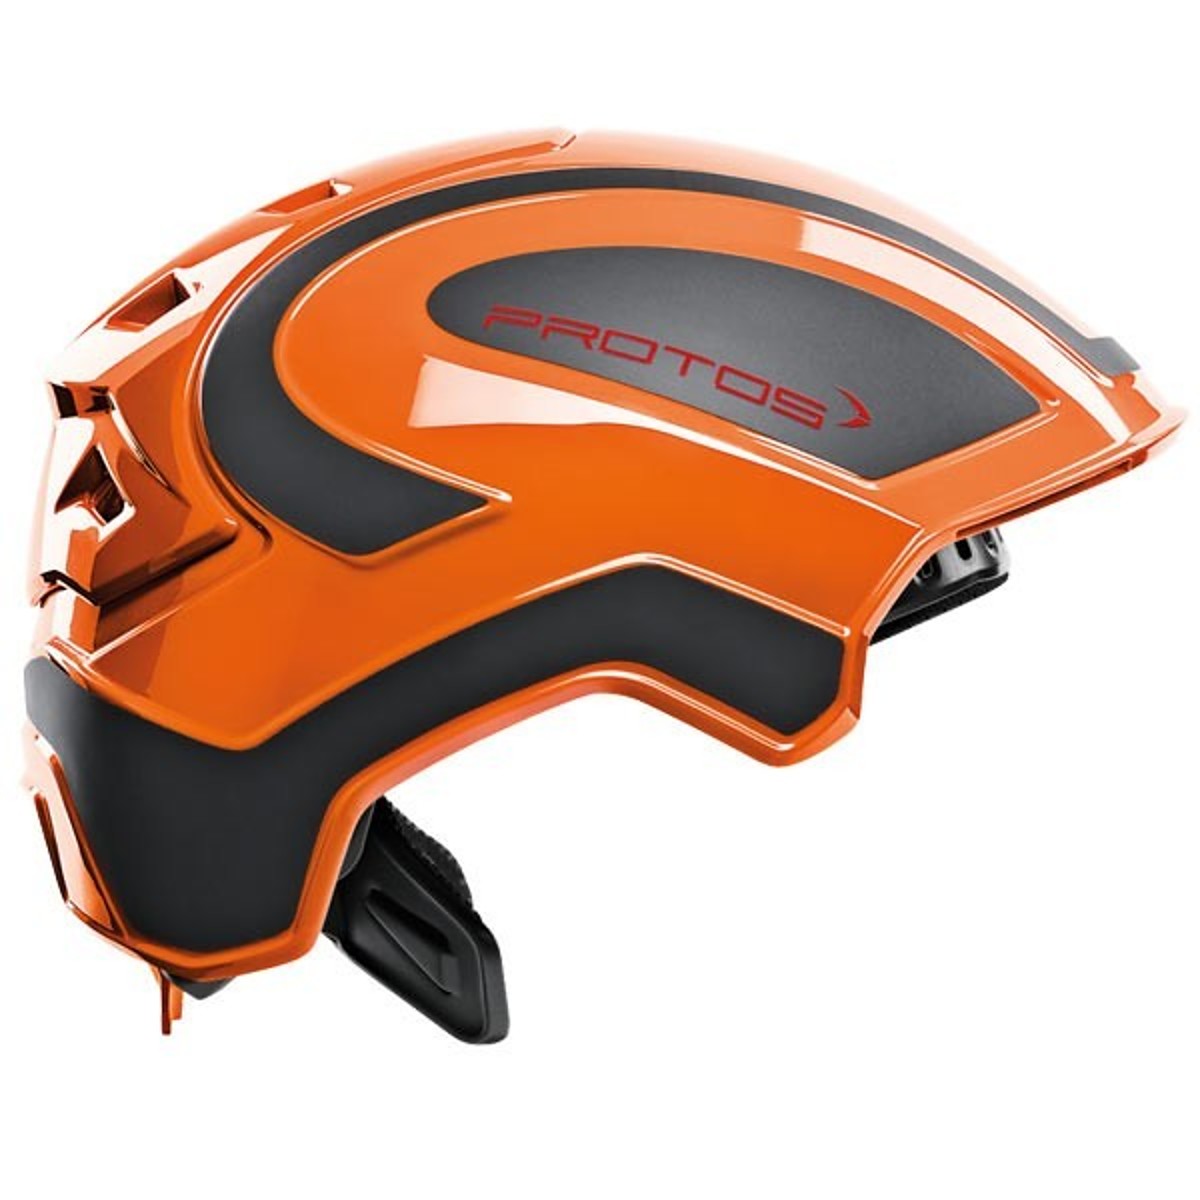 Protos Helm maximaler Schutz - 4